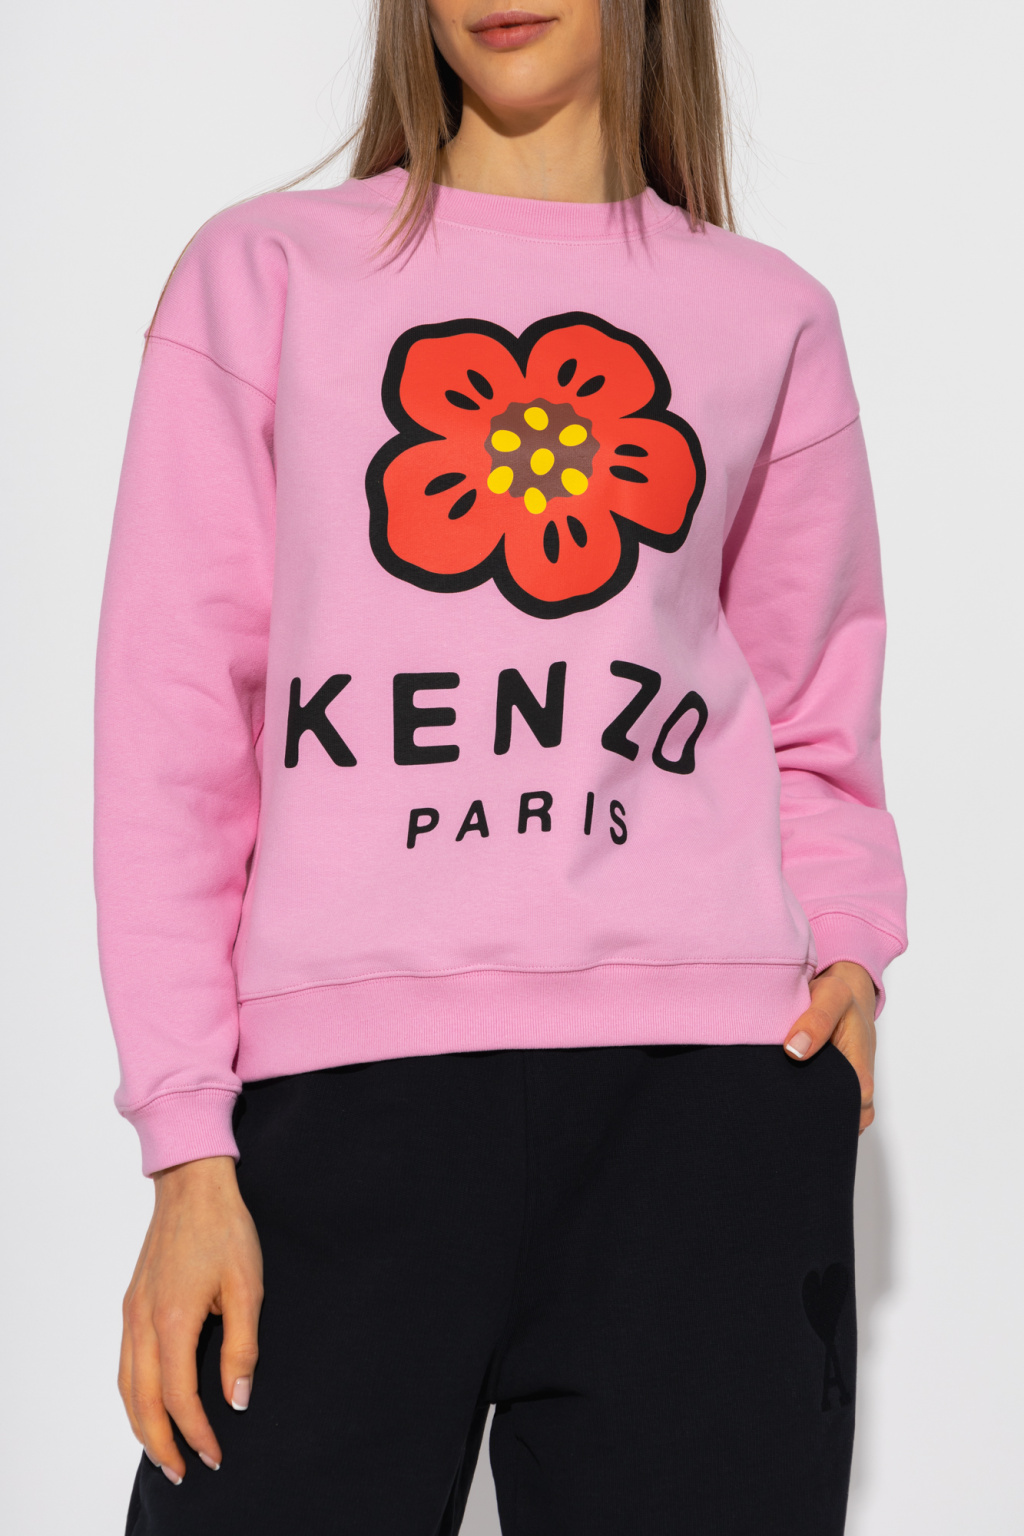 Kenzo clothing XXl Sweatpants